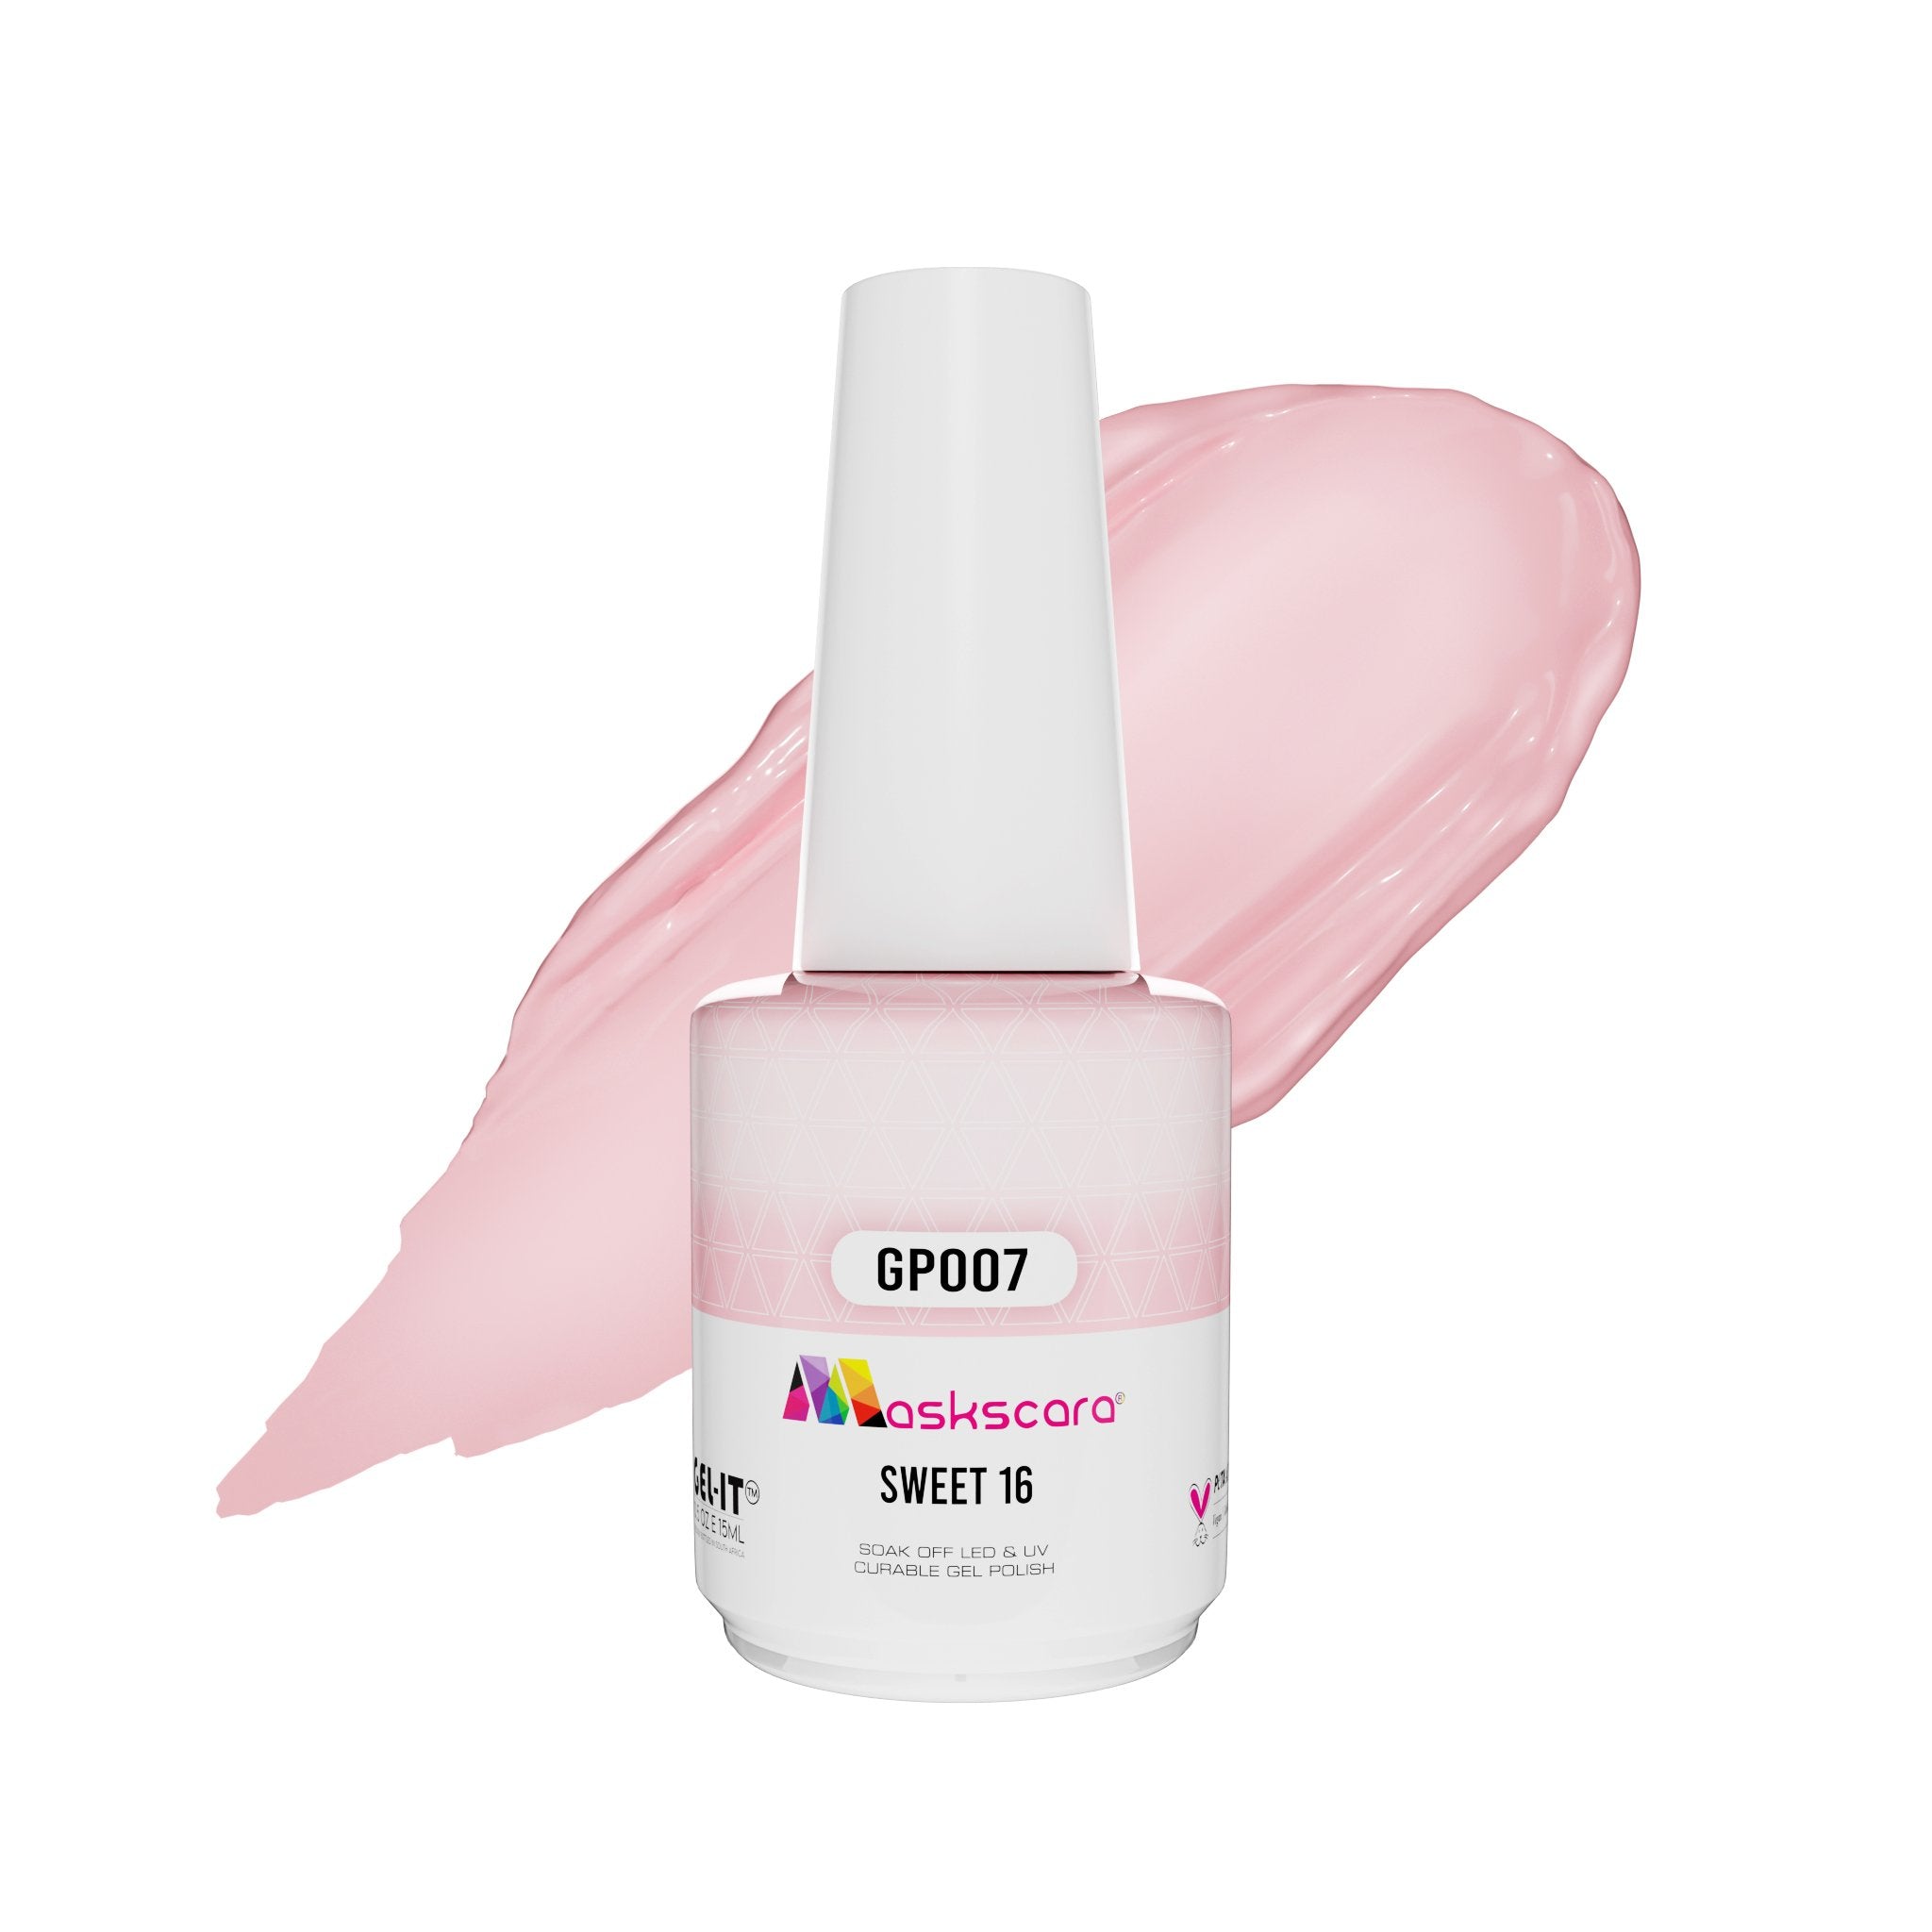 <img scr = “ GP007 Sweet 16.jpeg” alt = “Translucent french pink gel polish colour by the brand Maskscara”>